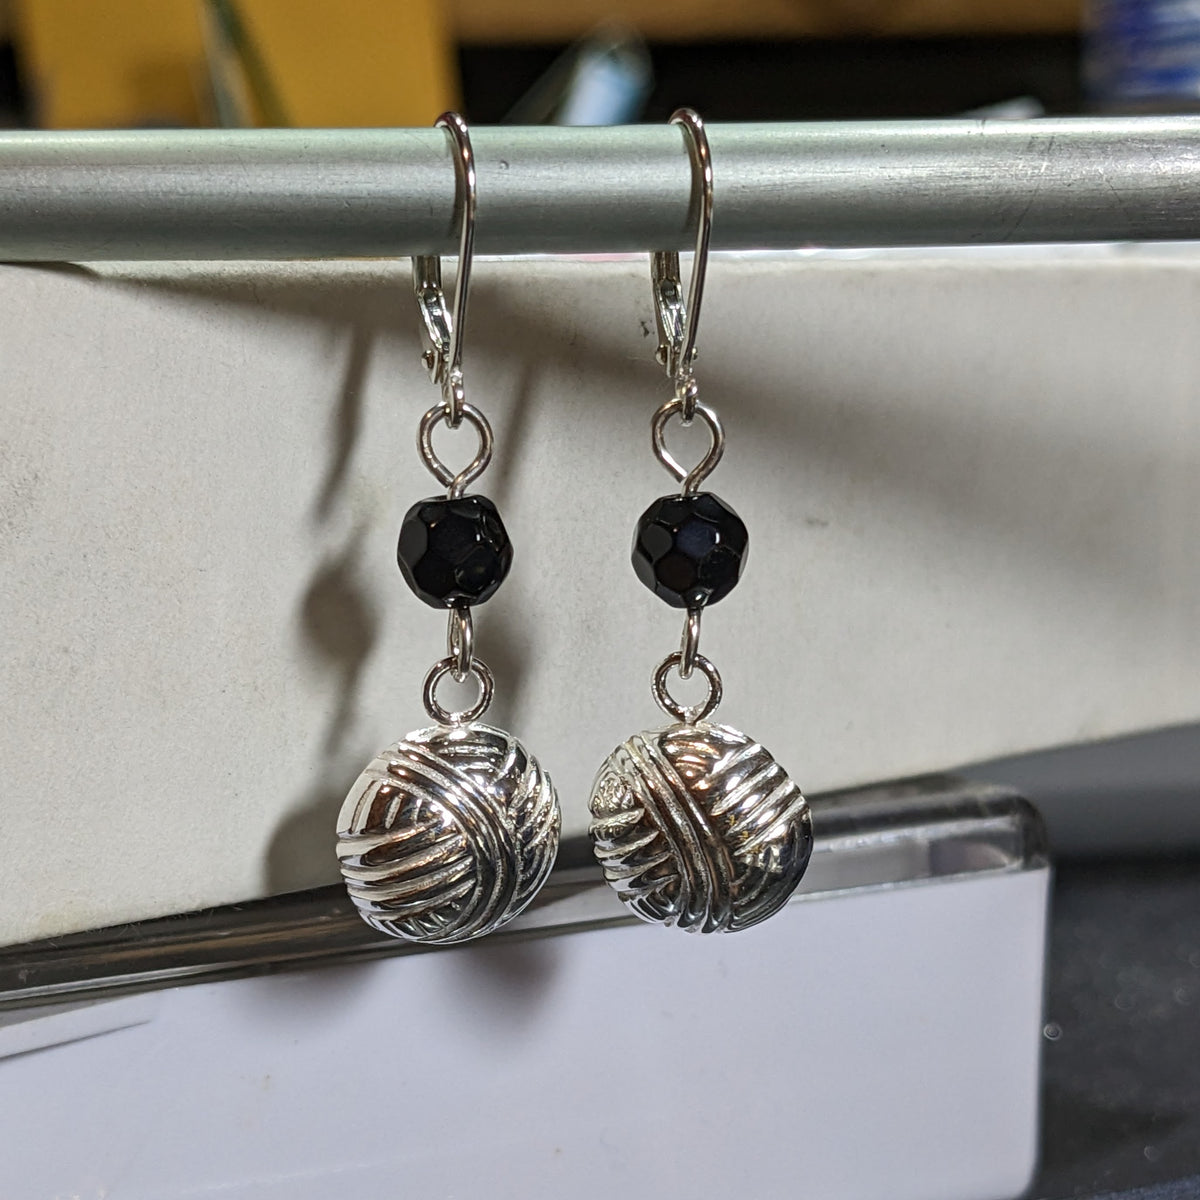 Yarn Ball Earrings - Silver with beads